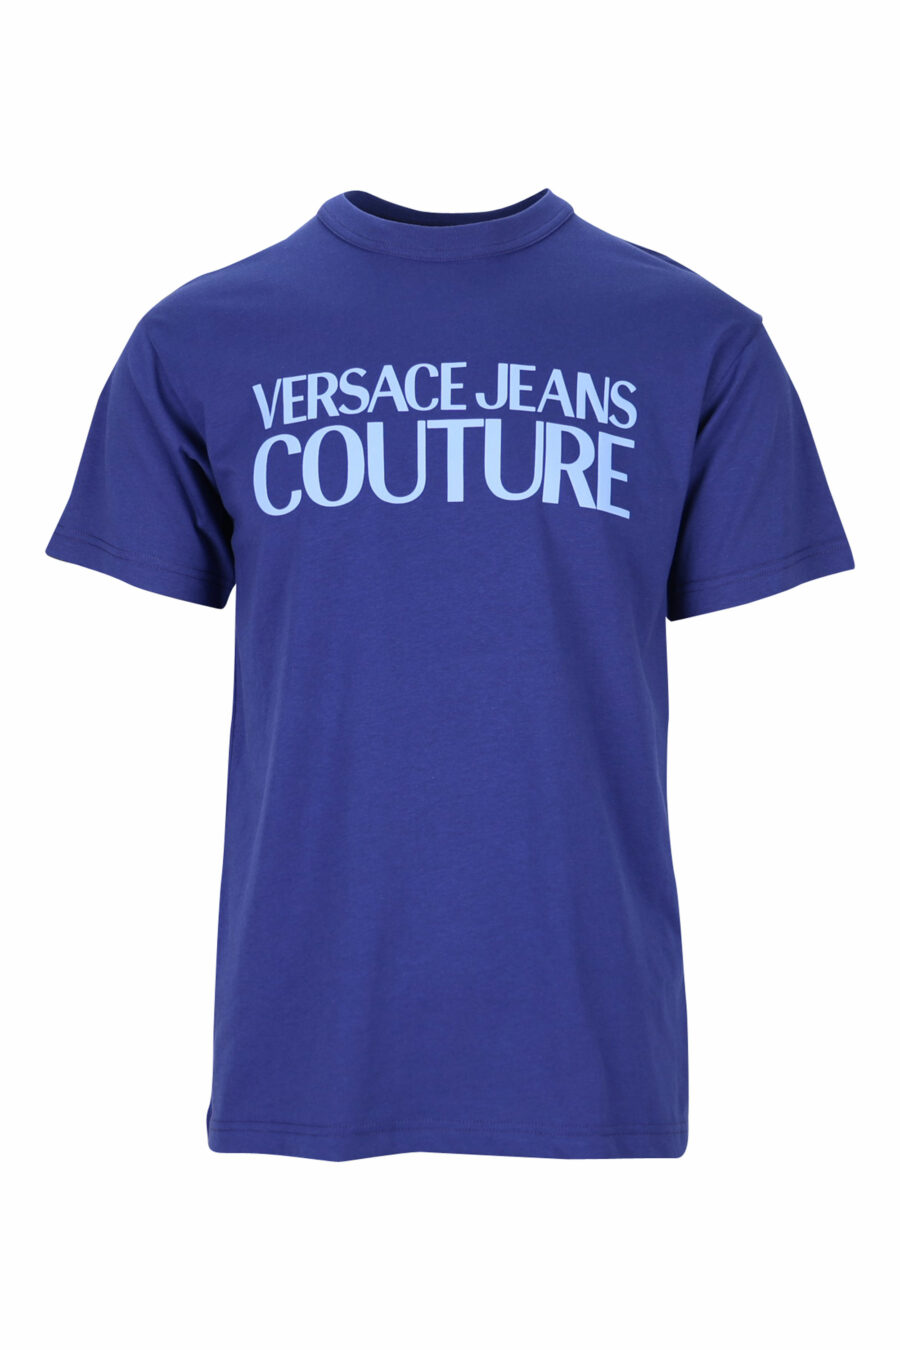 Versace Jeans Couture - Camiseta azul marino con maxilogo clásico naranja -  BLS Fashion